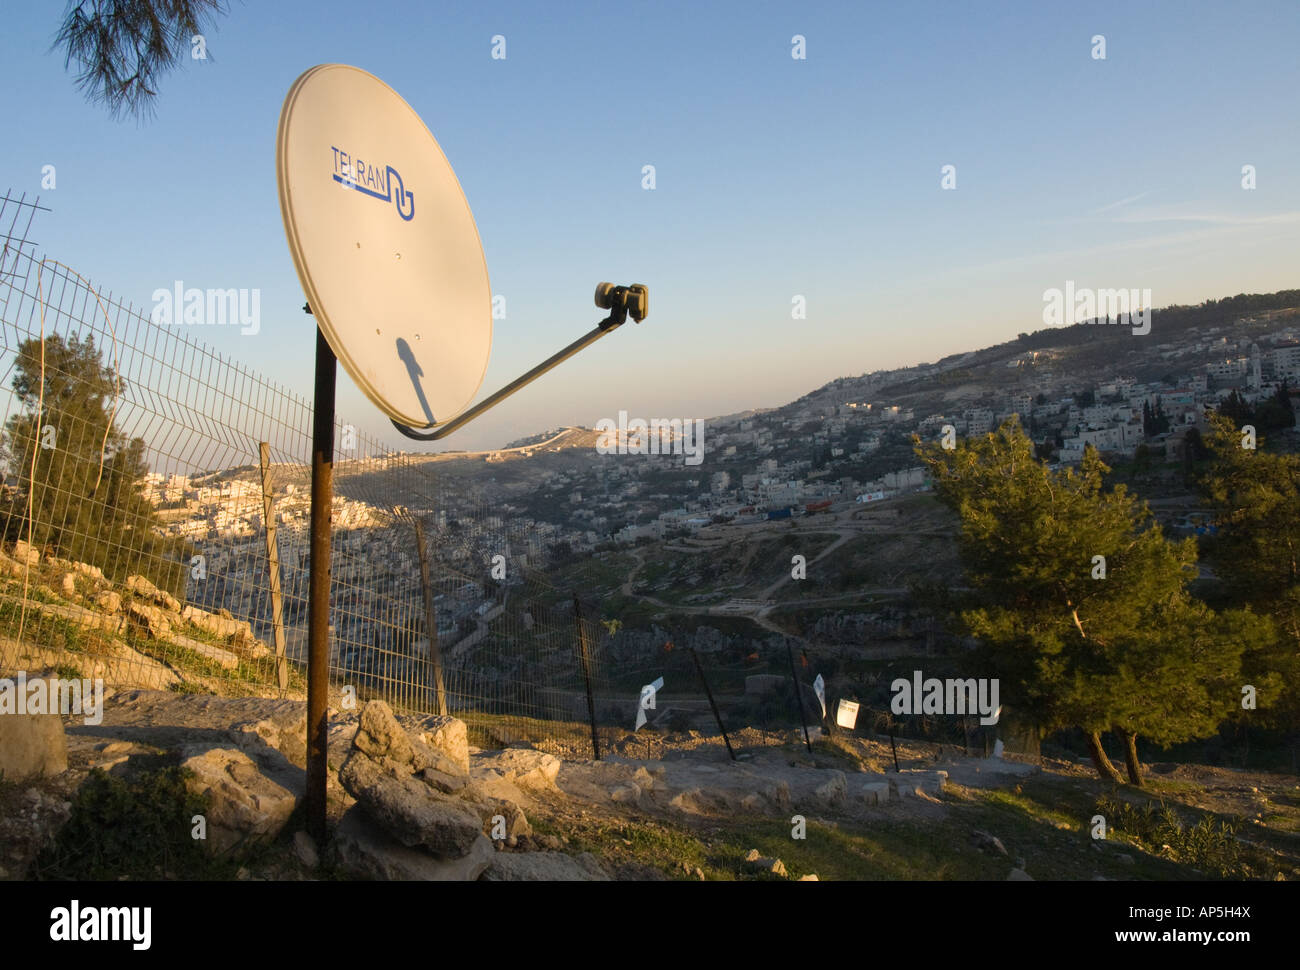 Israel Jerusalem village of Silwan Satelite TV dish on a rusted pole with typical Jerusalem hills landscape in bkgd Stock Photo